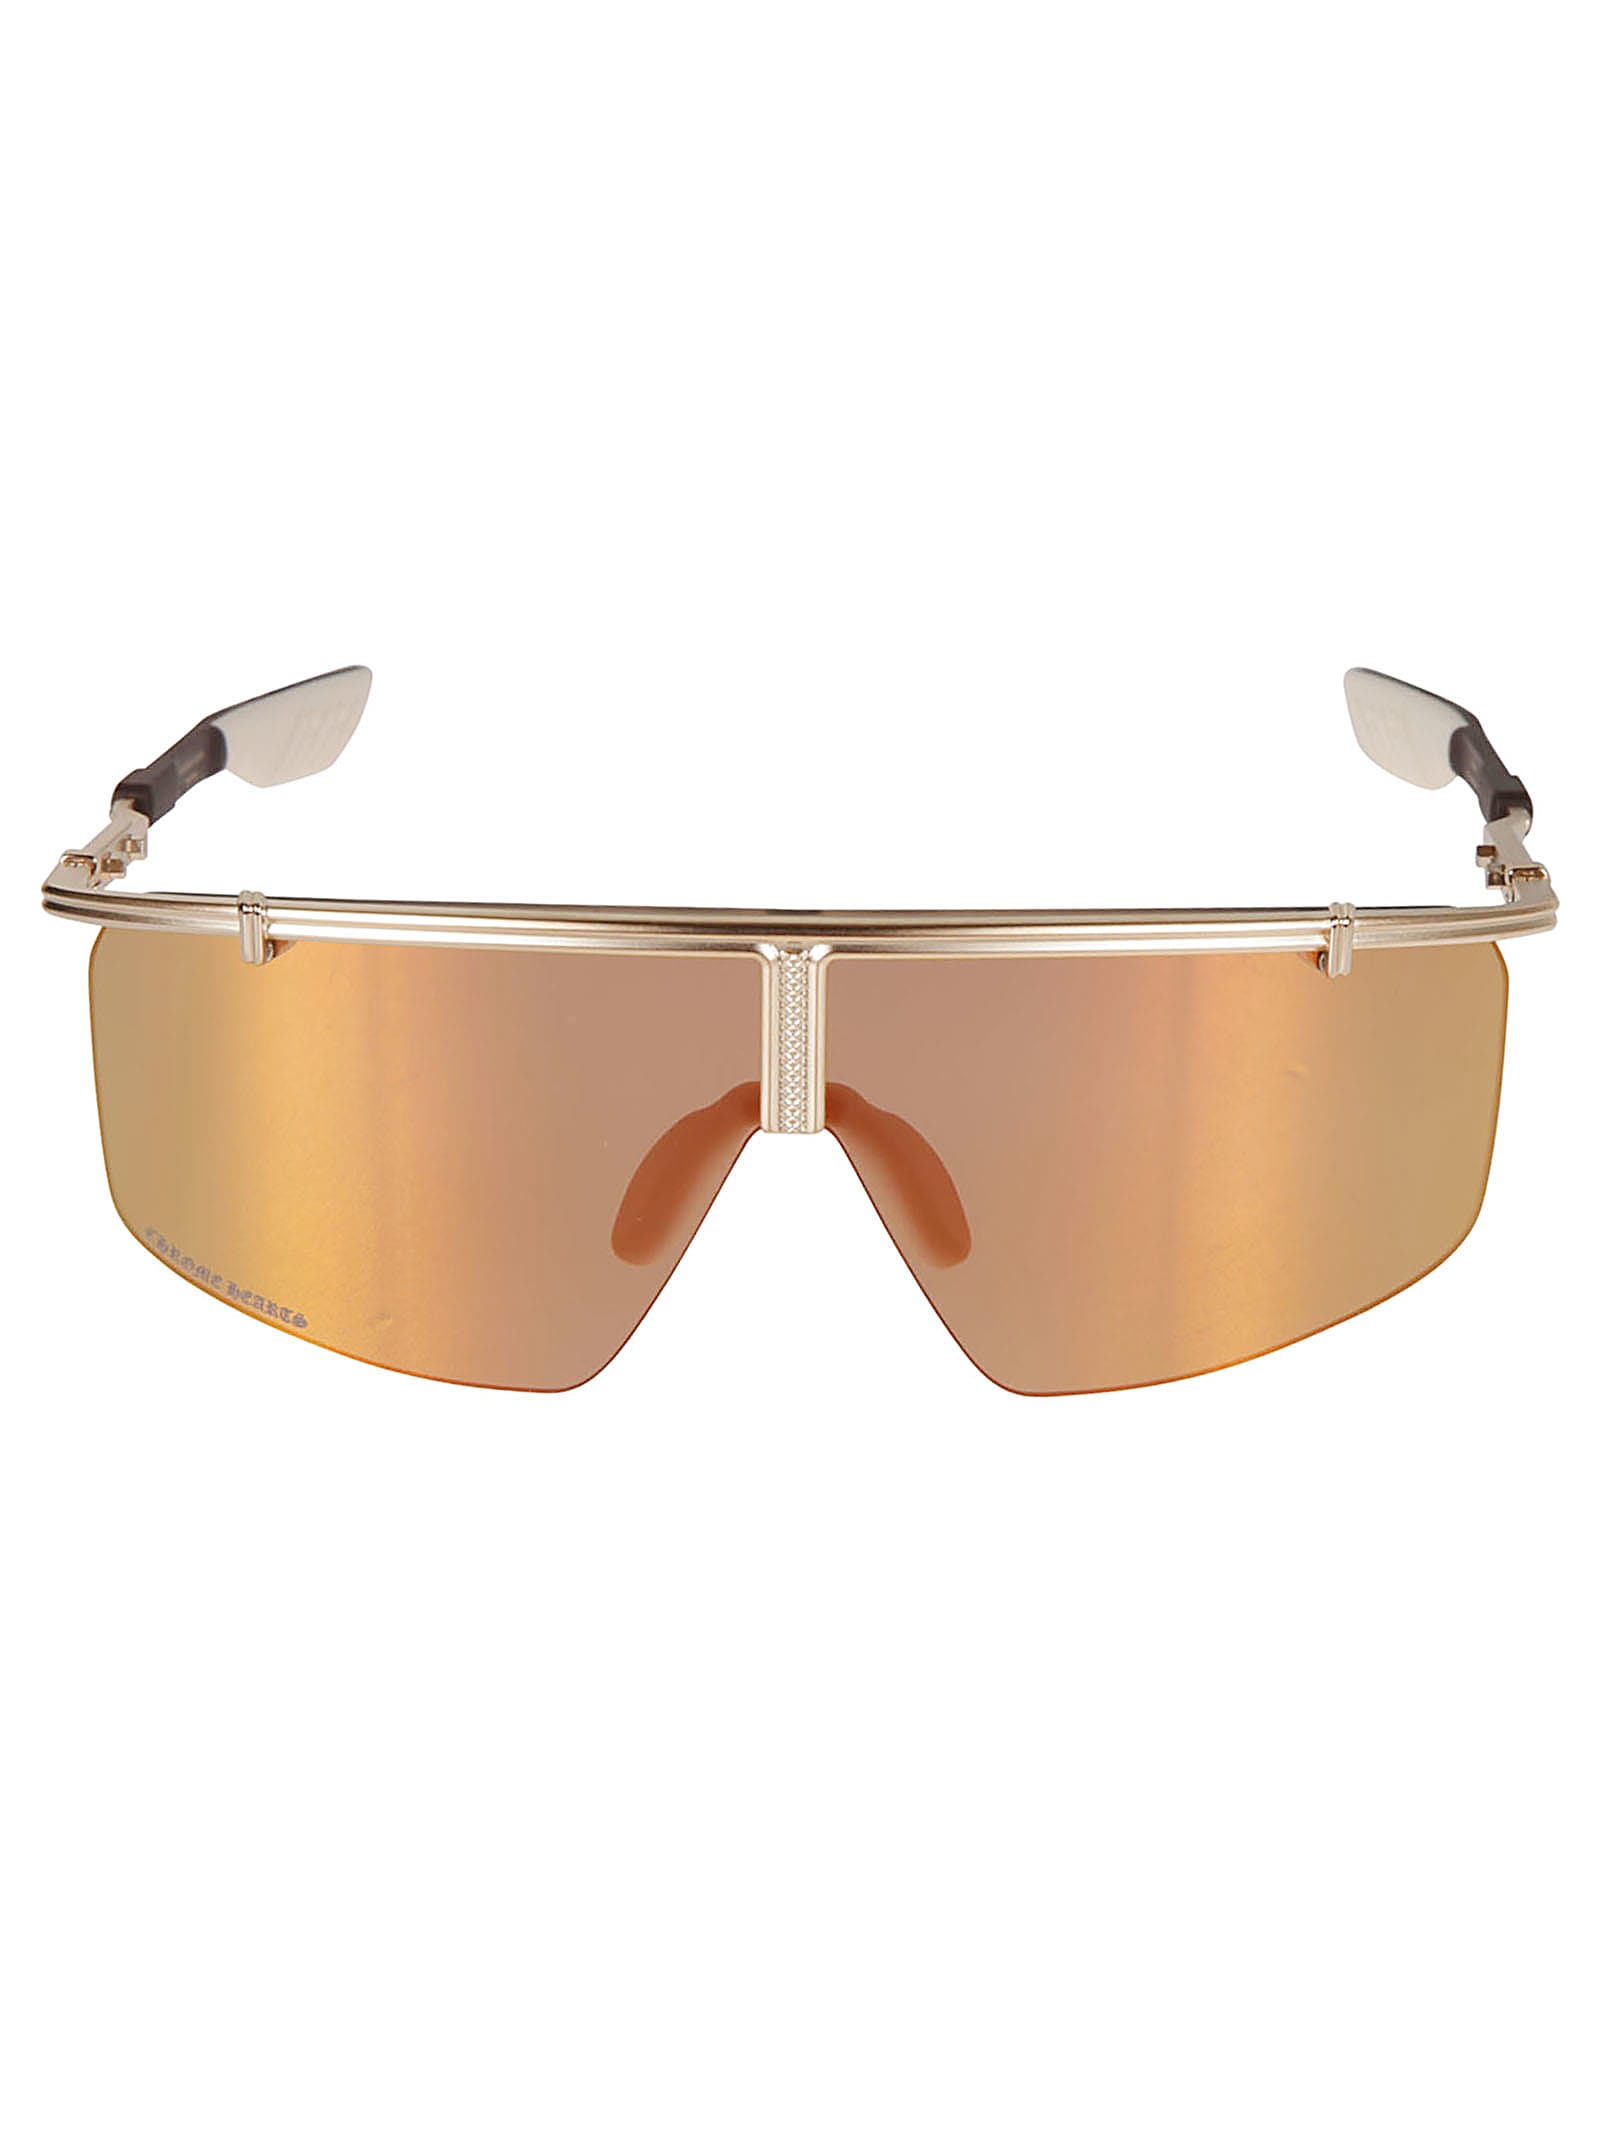 Chrome Hearts Clitanic Sunglasses In Mgp/gp-clb